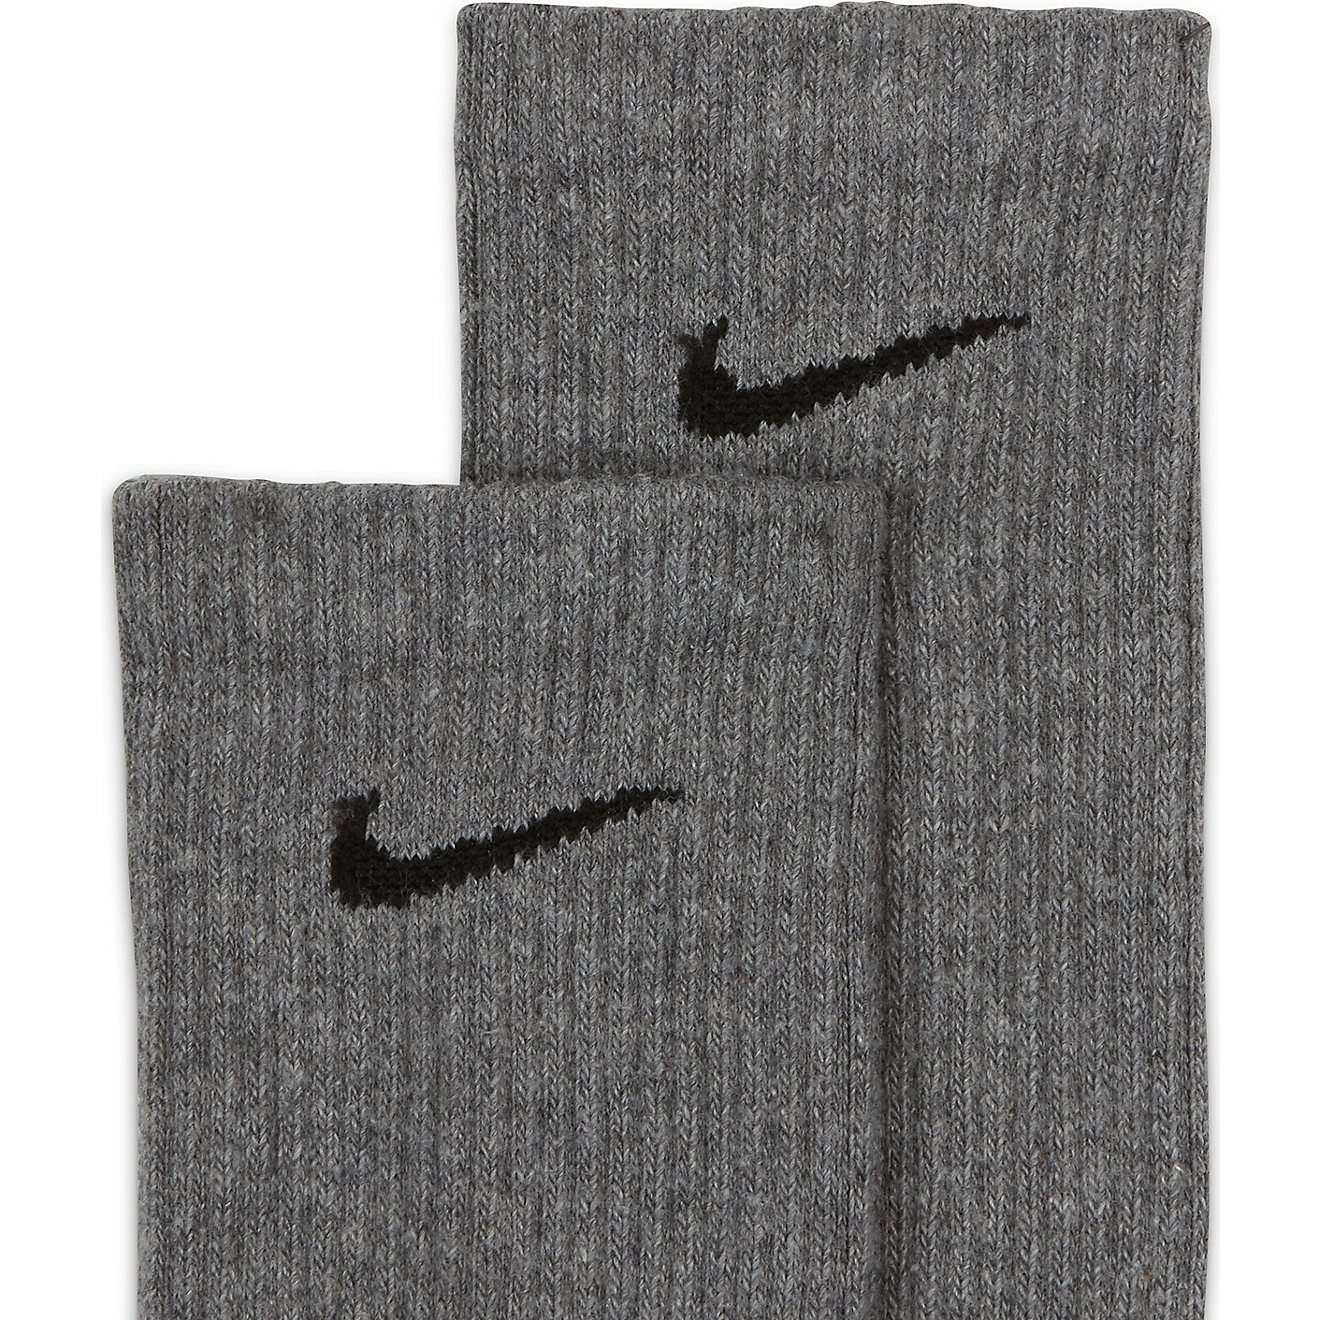 Nike Men's Everyday Plus Cushion Training Crew Socks 6 Pack                                                                      - view number 2